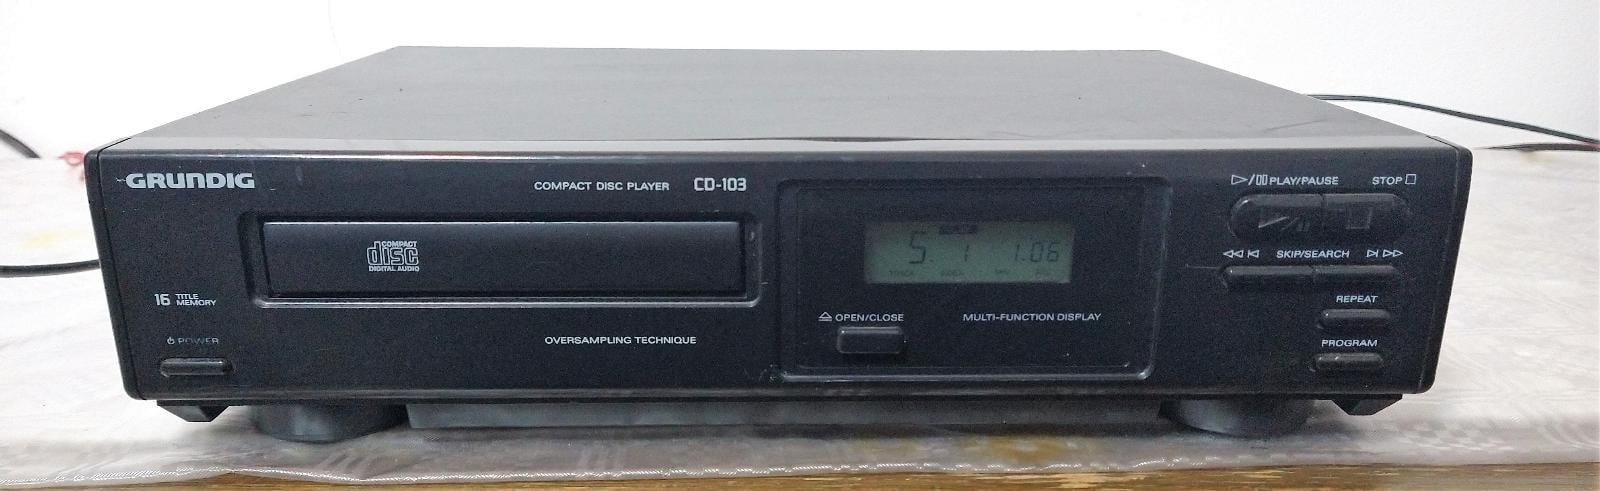 Grundig CD 103 - TV, audio, video